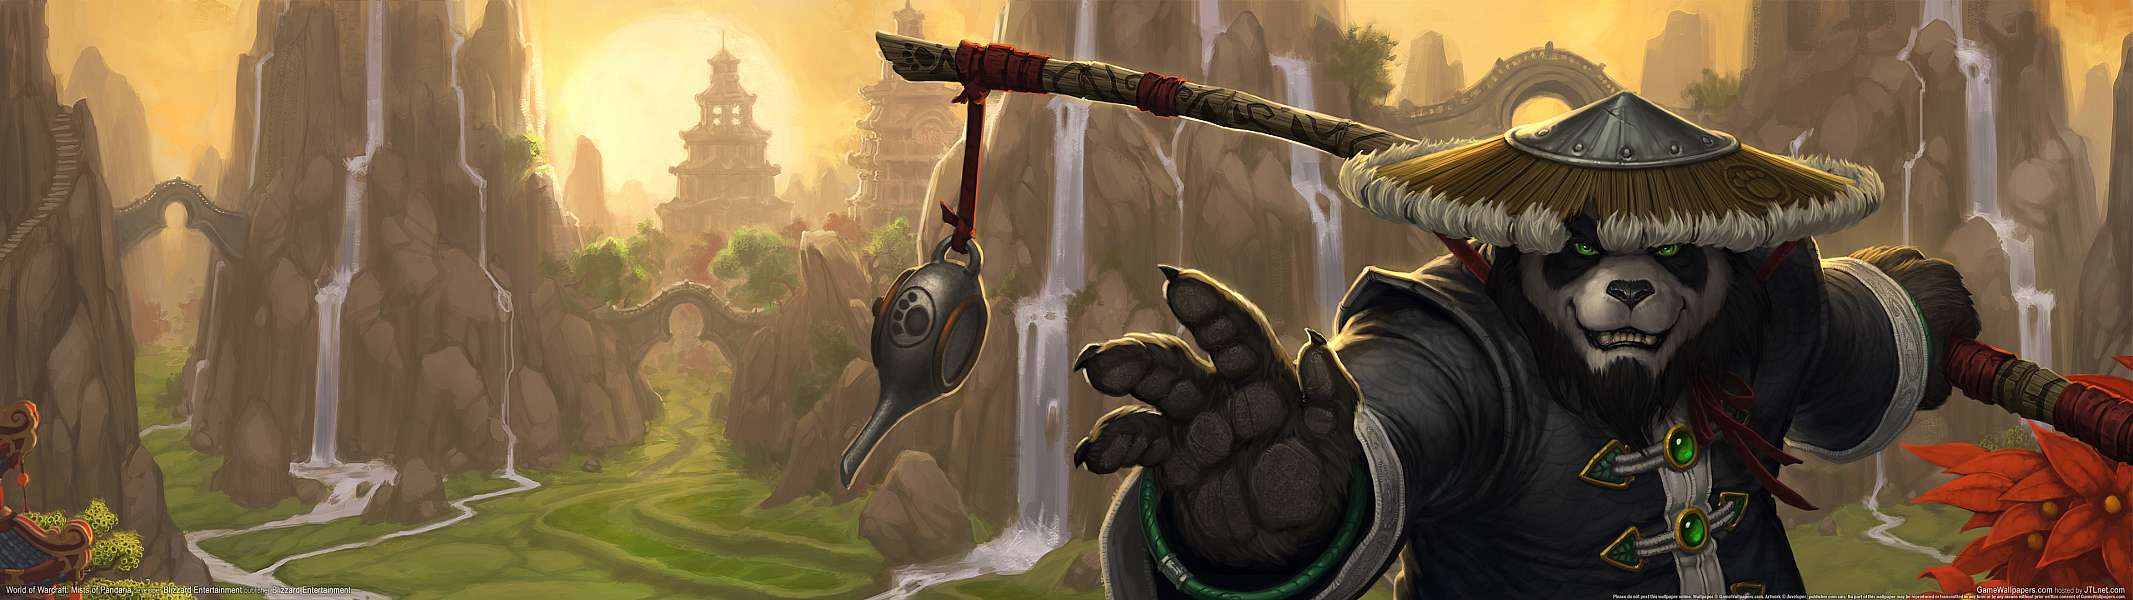 World of Warcraft: Mists of Pandaria dual screen Hintergrundbild